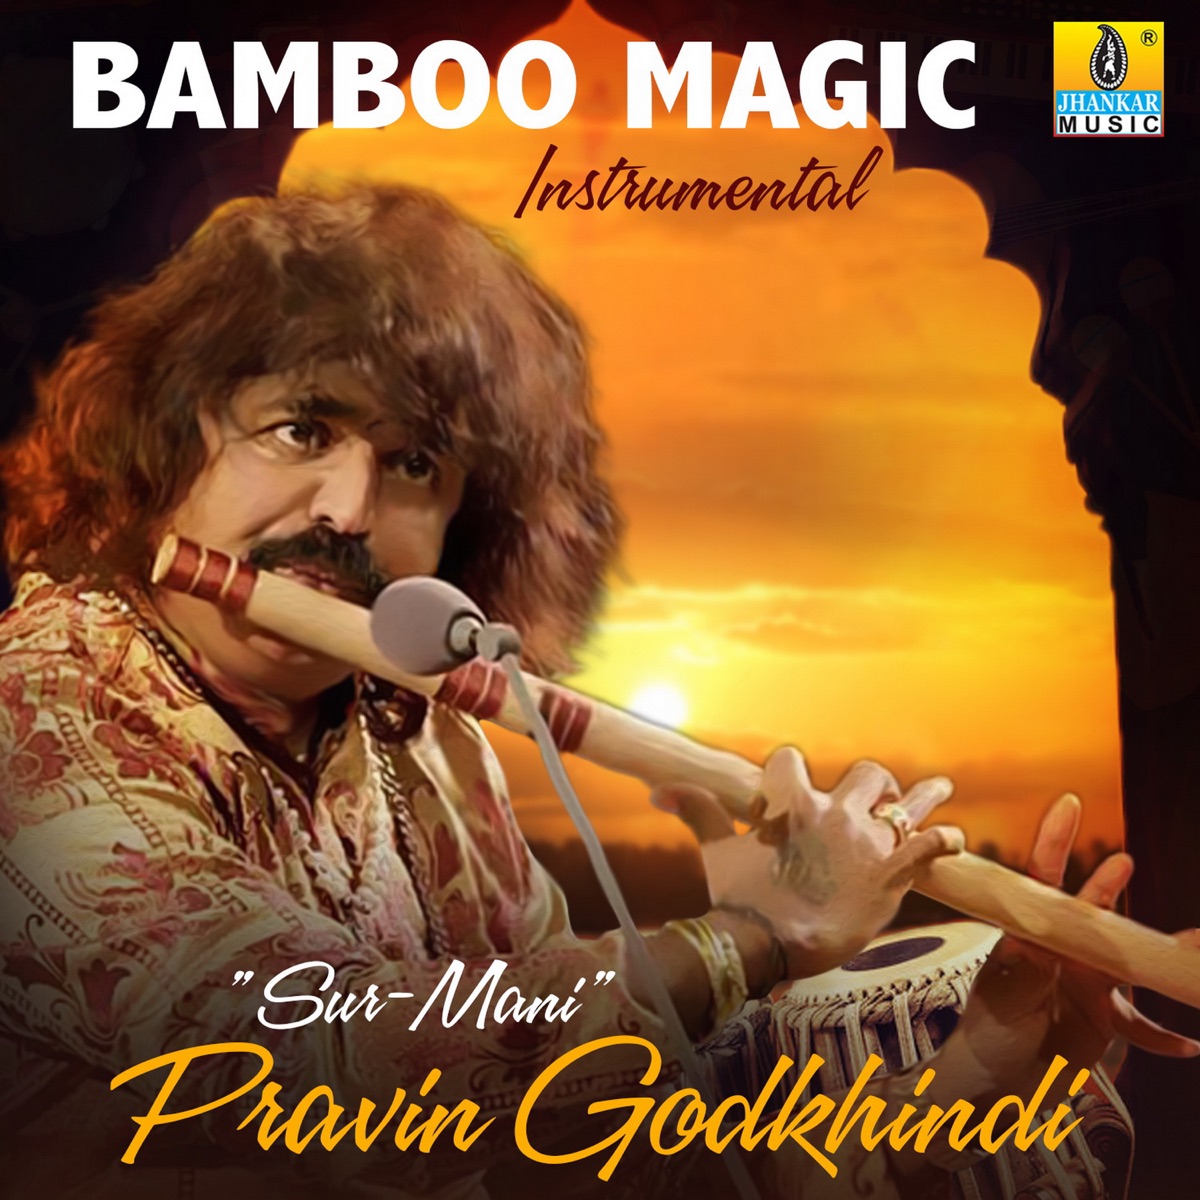 Bamboo Magic - Album by Pravin Godkhindi - Apple Music